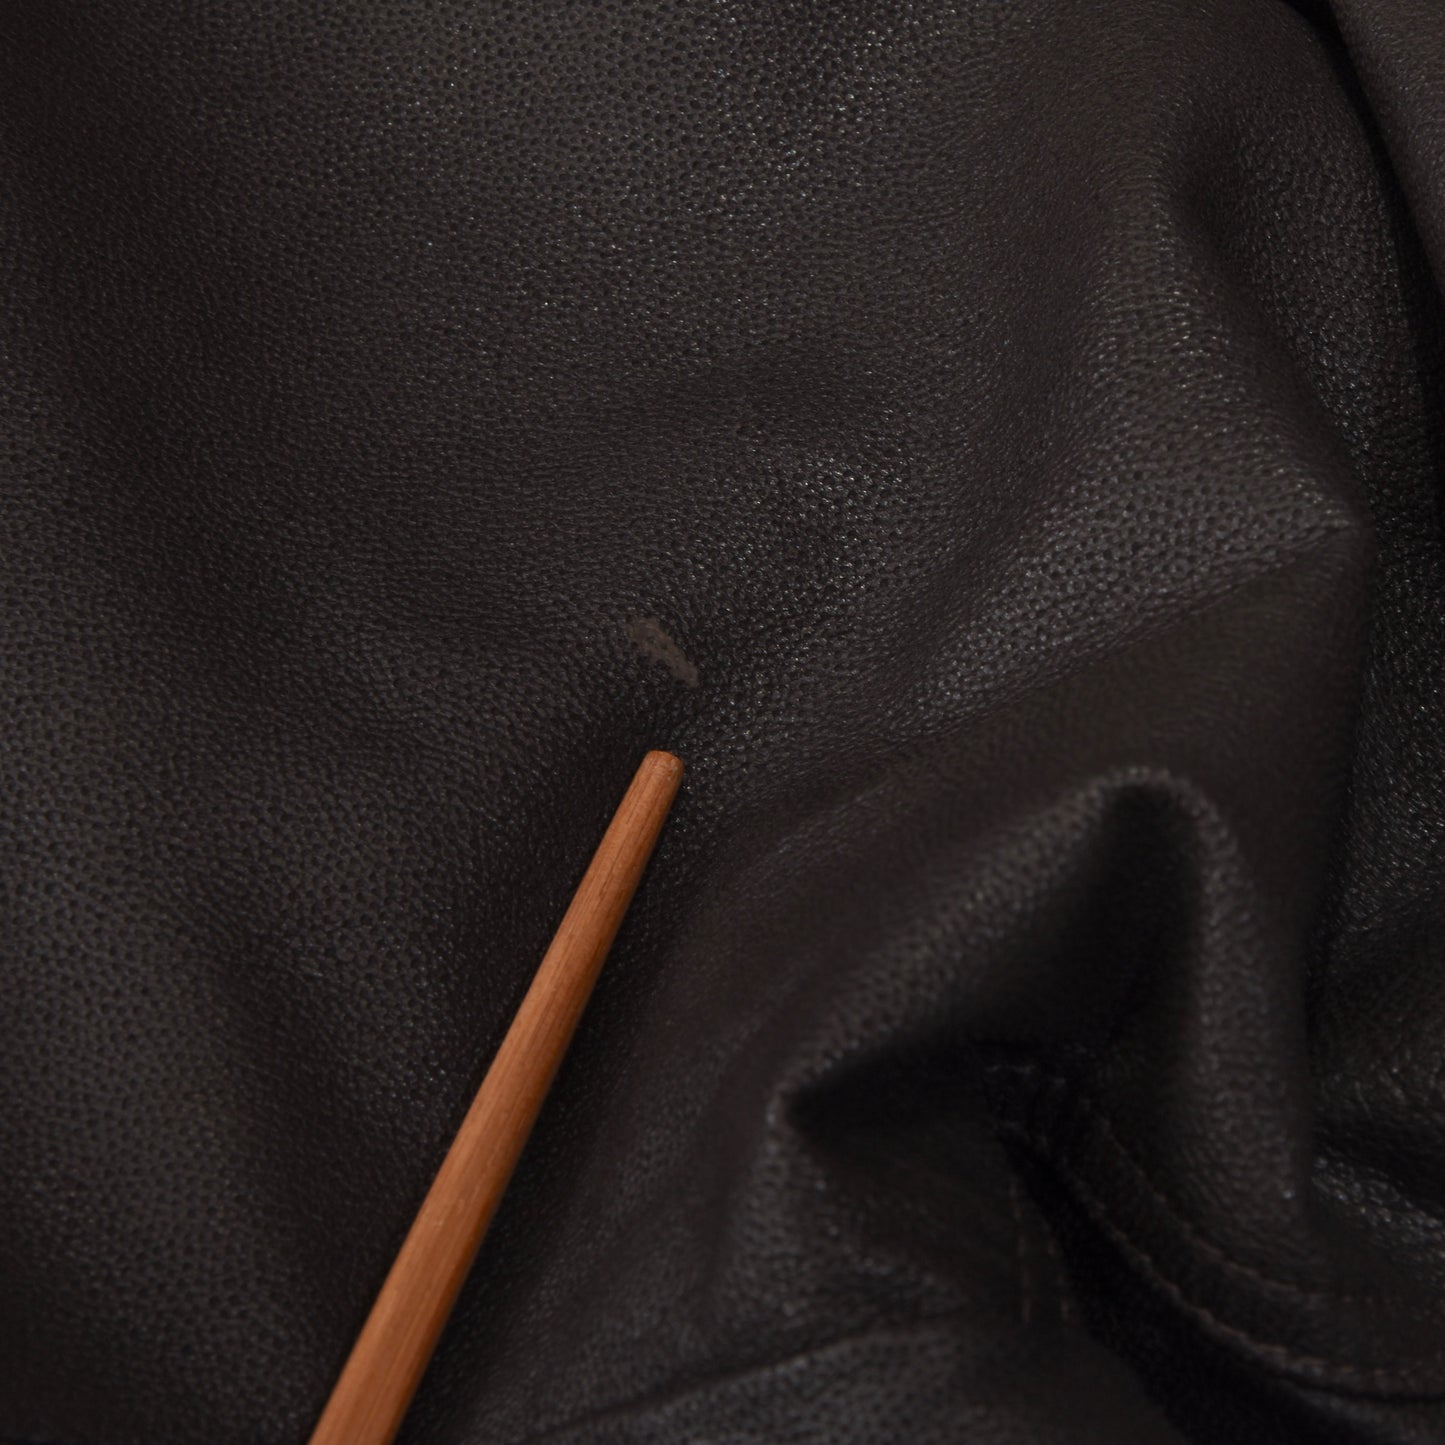 Enrico Mandelli Leather Jacket + Cashmere Lining - Brown